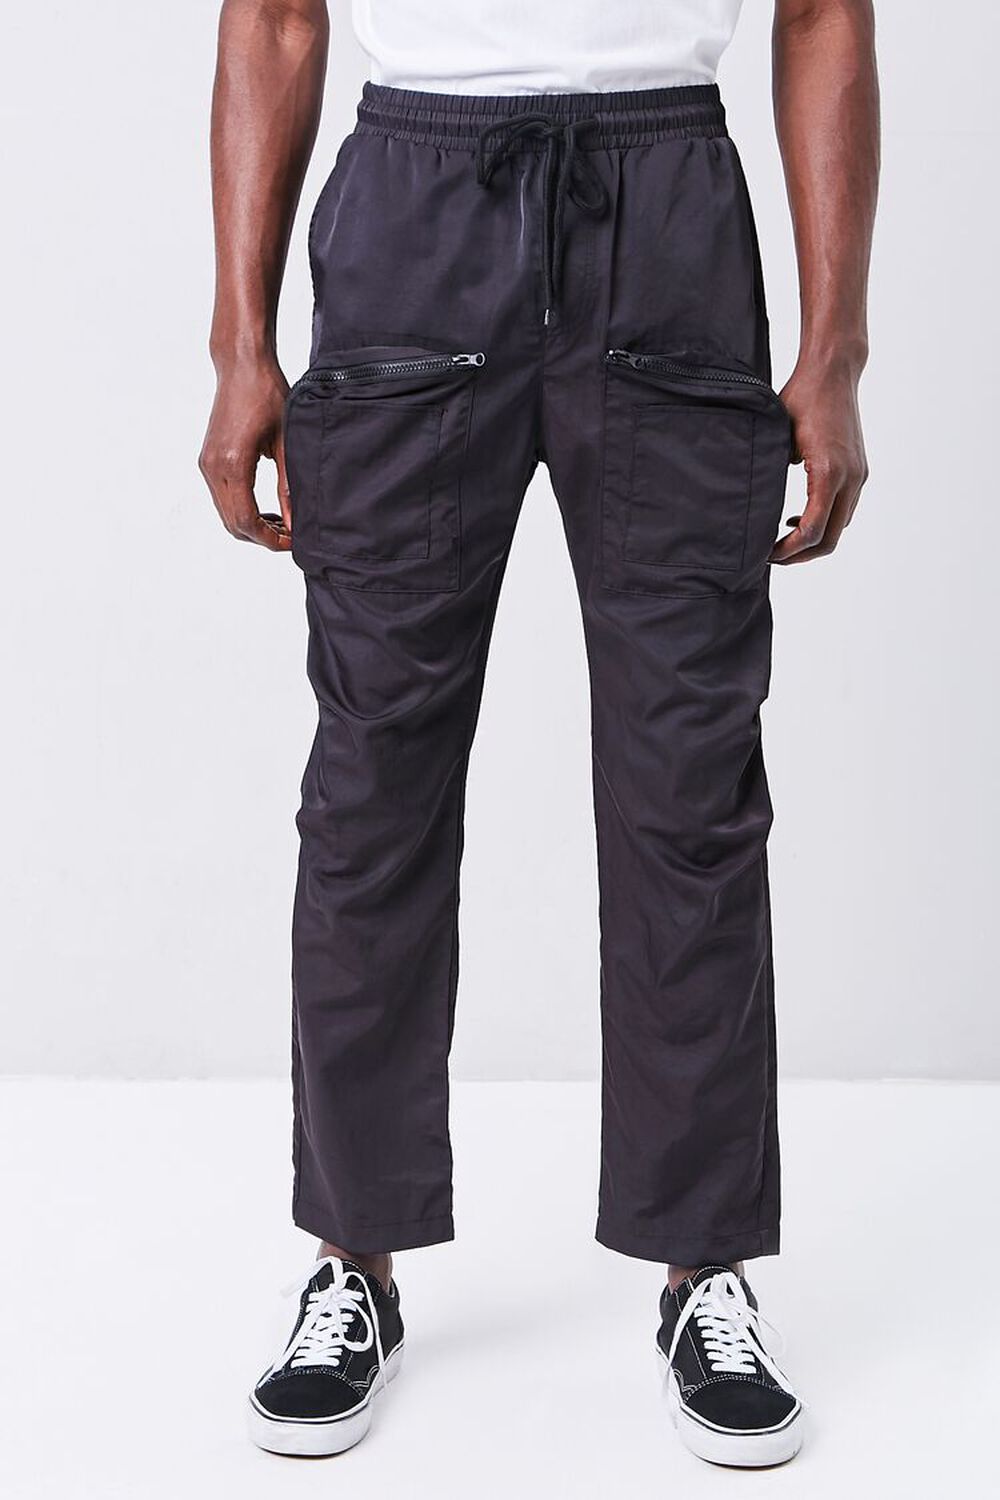 BLACK Drawstring Zippered Cargo Pants, image 2